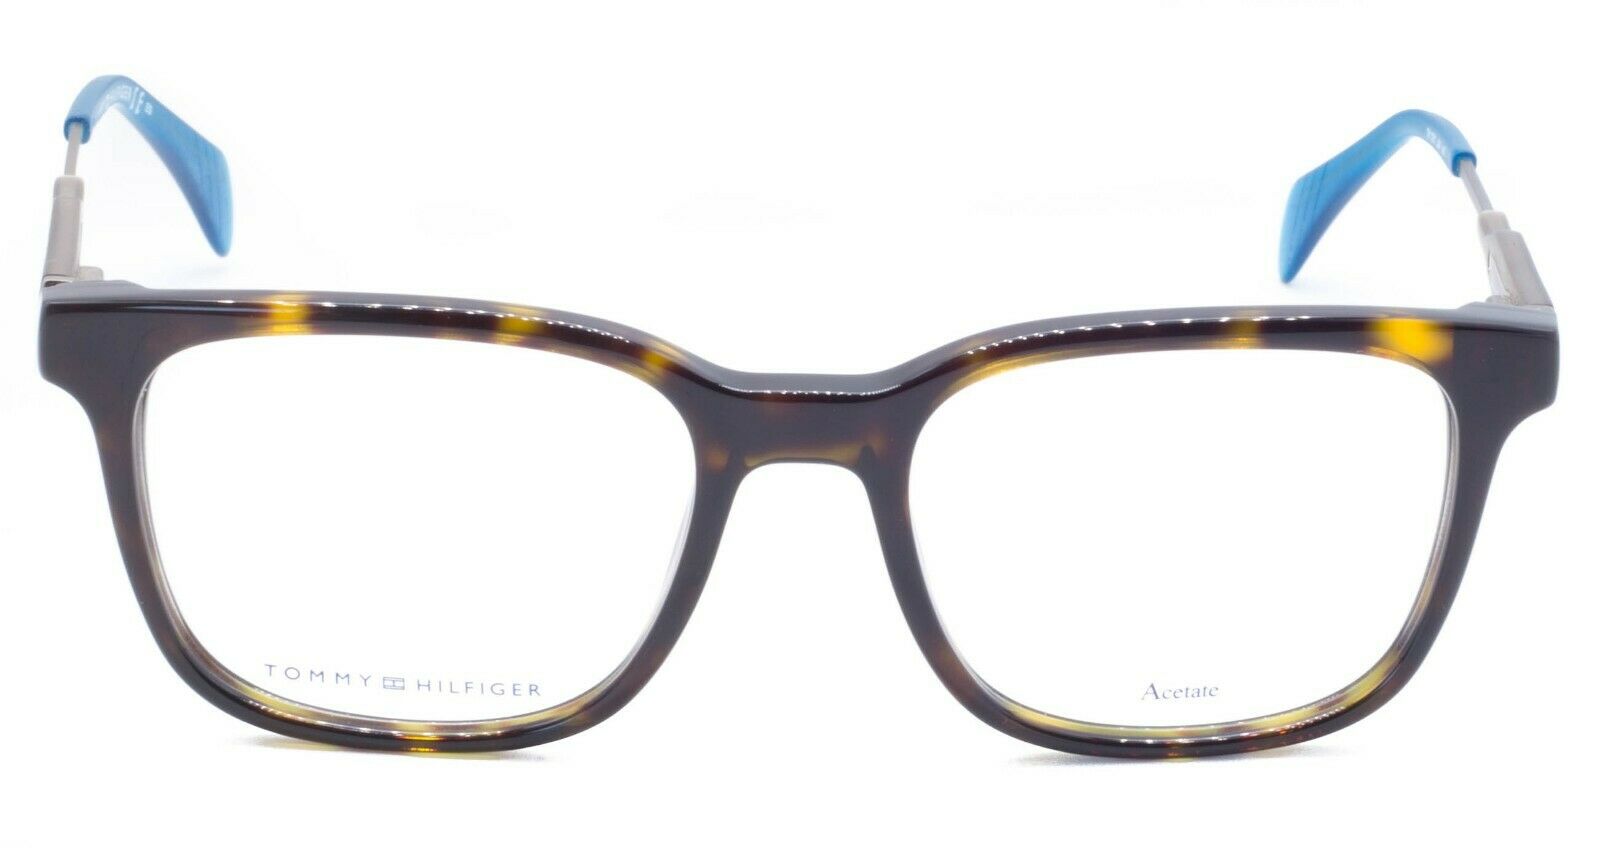 TOMMY HILFIGER TH 1351 JX4 50mm Eyewear FRAMES Glasses RX Optical Eyeglasses New